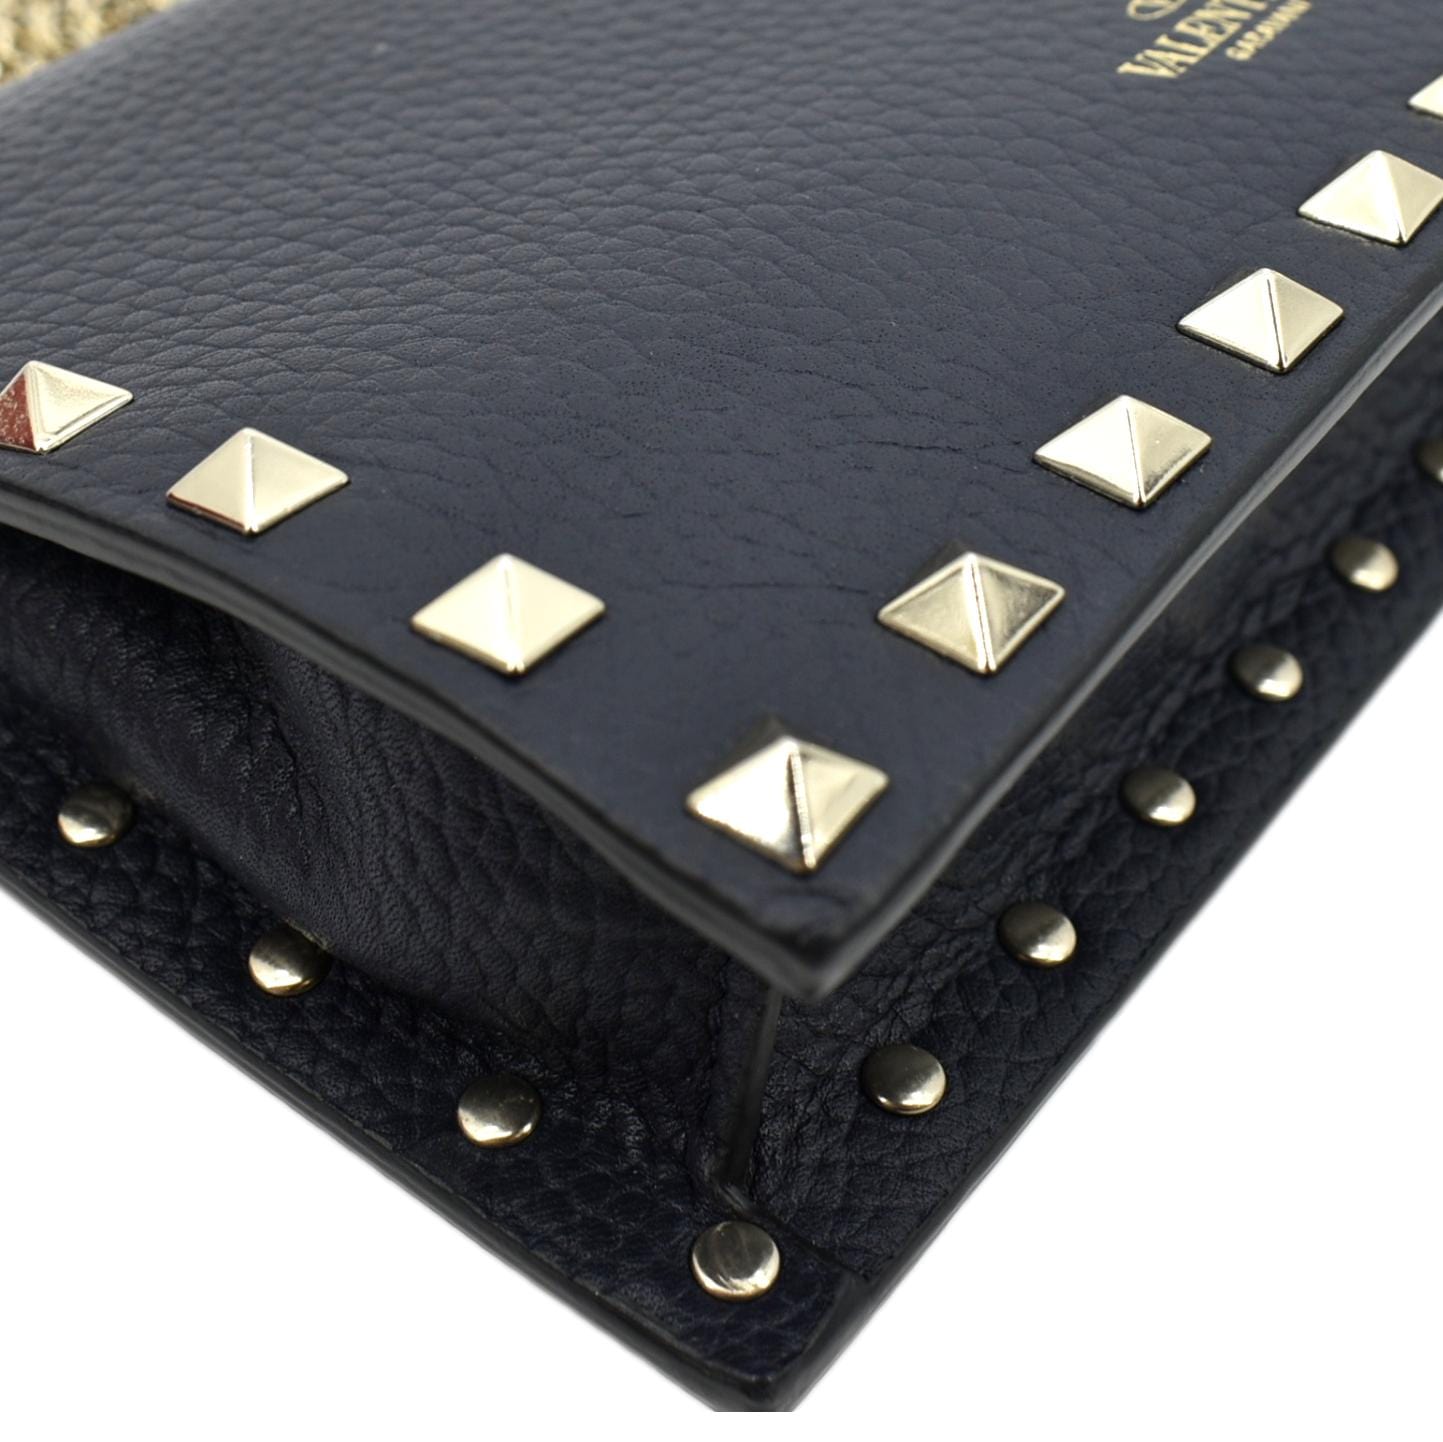 New Valentino Va Va Voom Rockstud Chain Bag Blue Leather NWT $2275